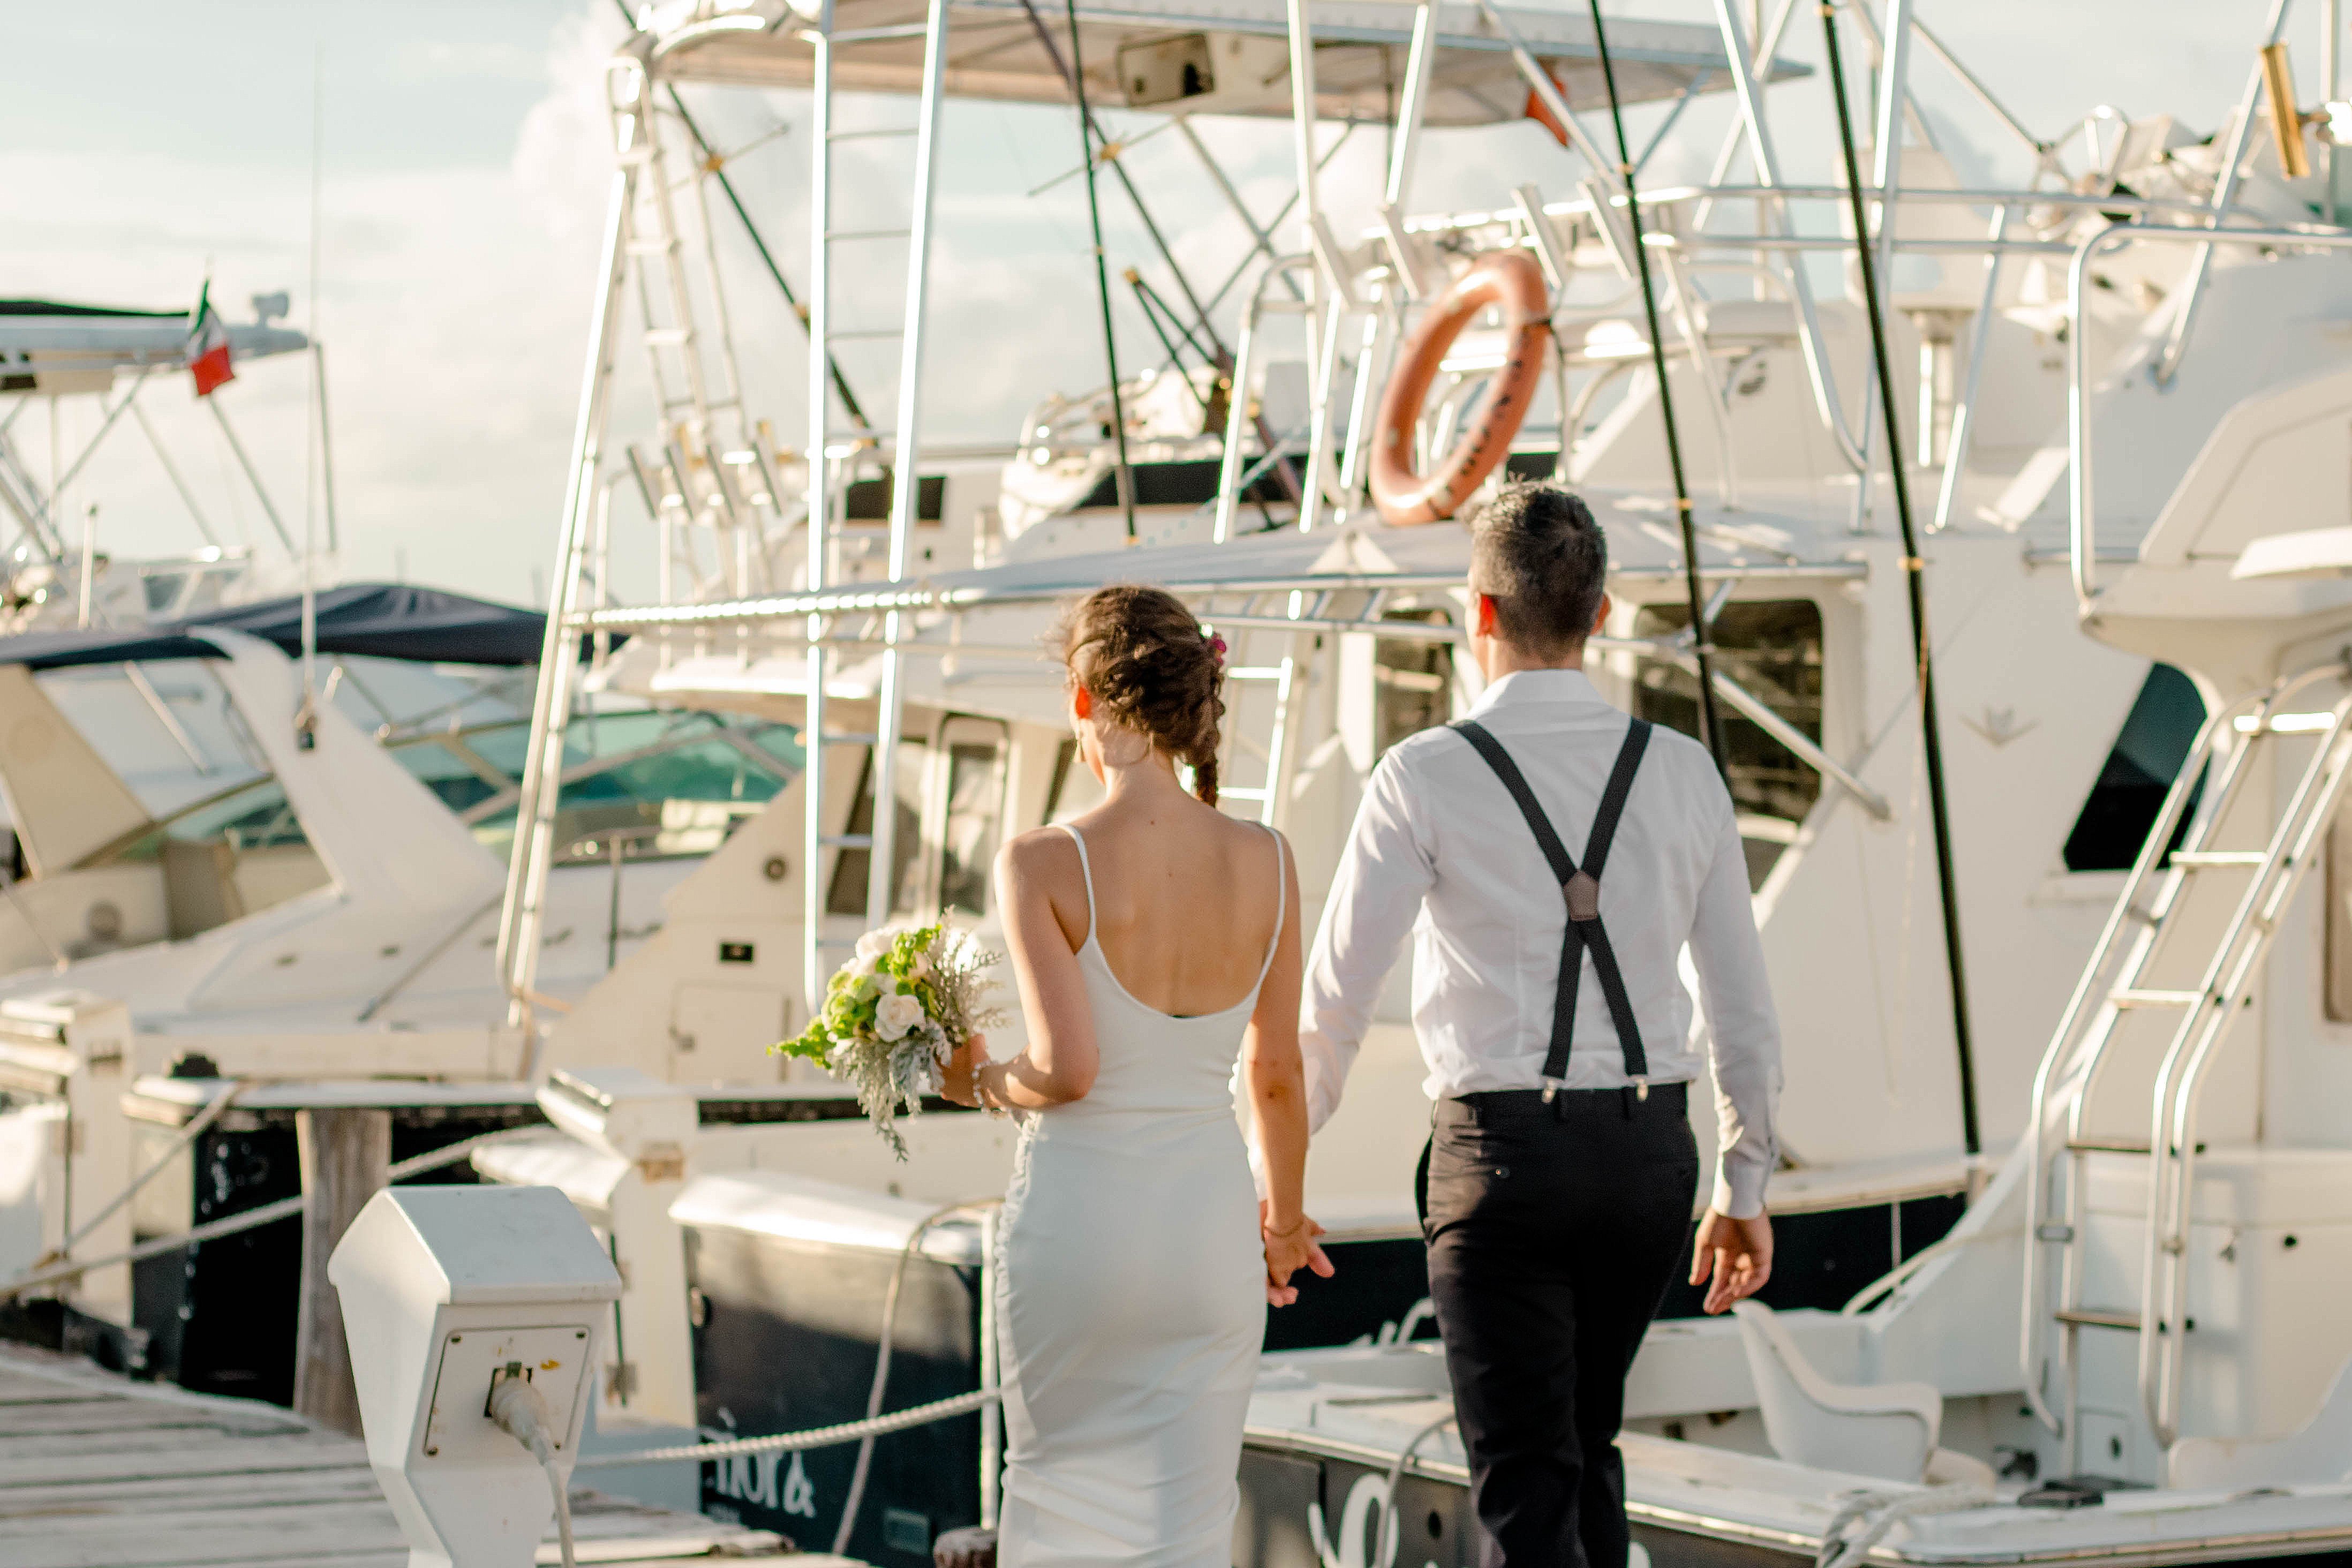 18 - Planning a wedding in Cancun - Cancun Sailing best weddings venues